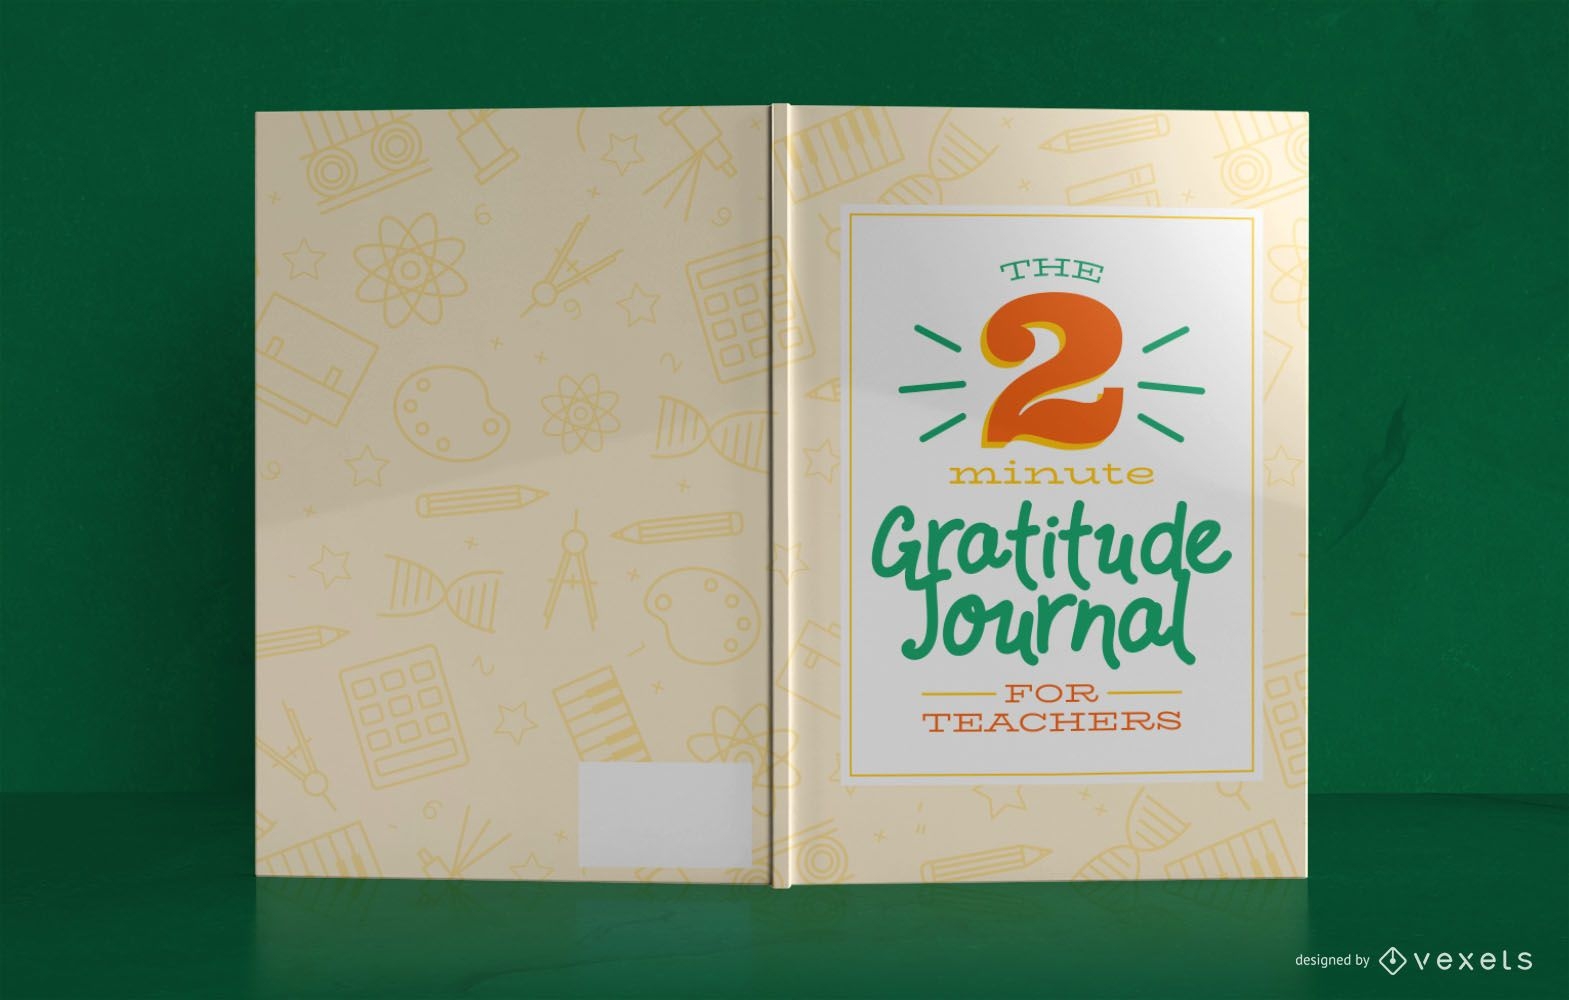 Teacher Gratitude journal book cover design